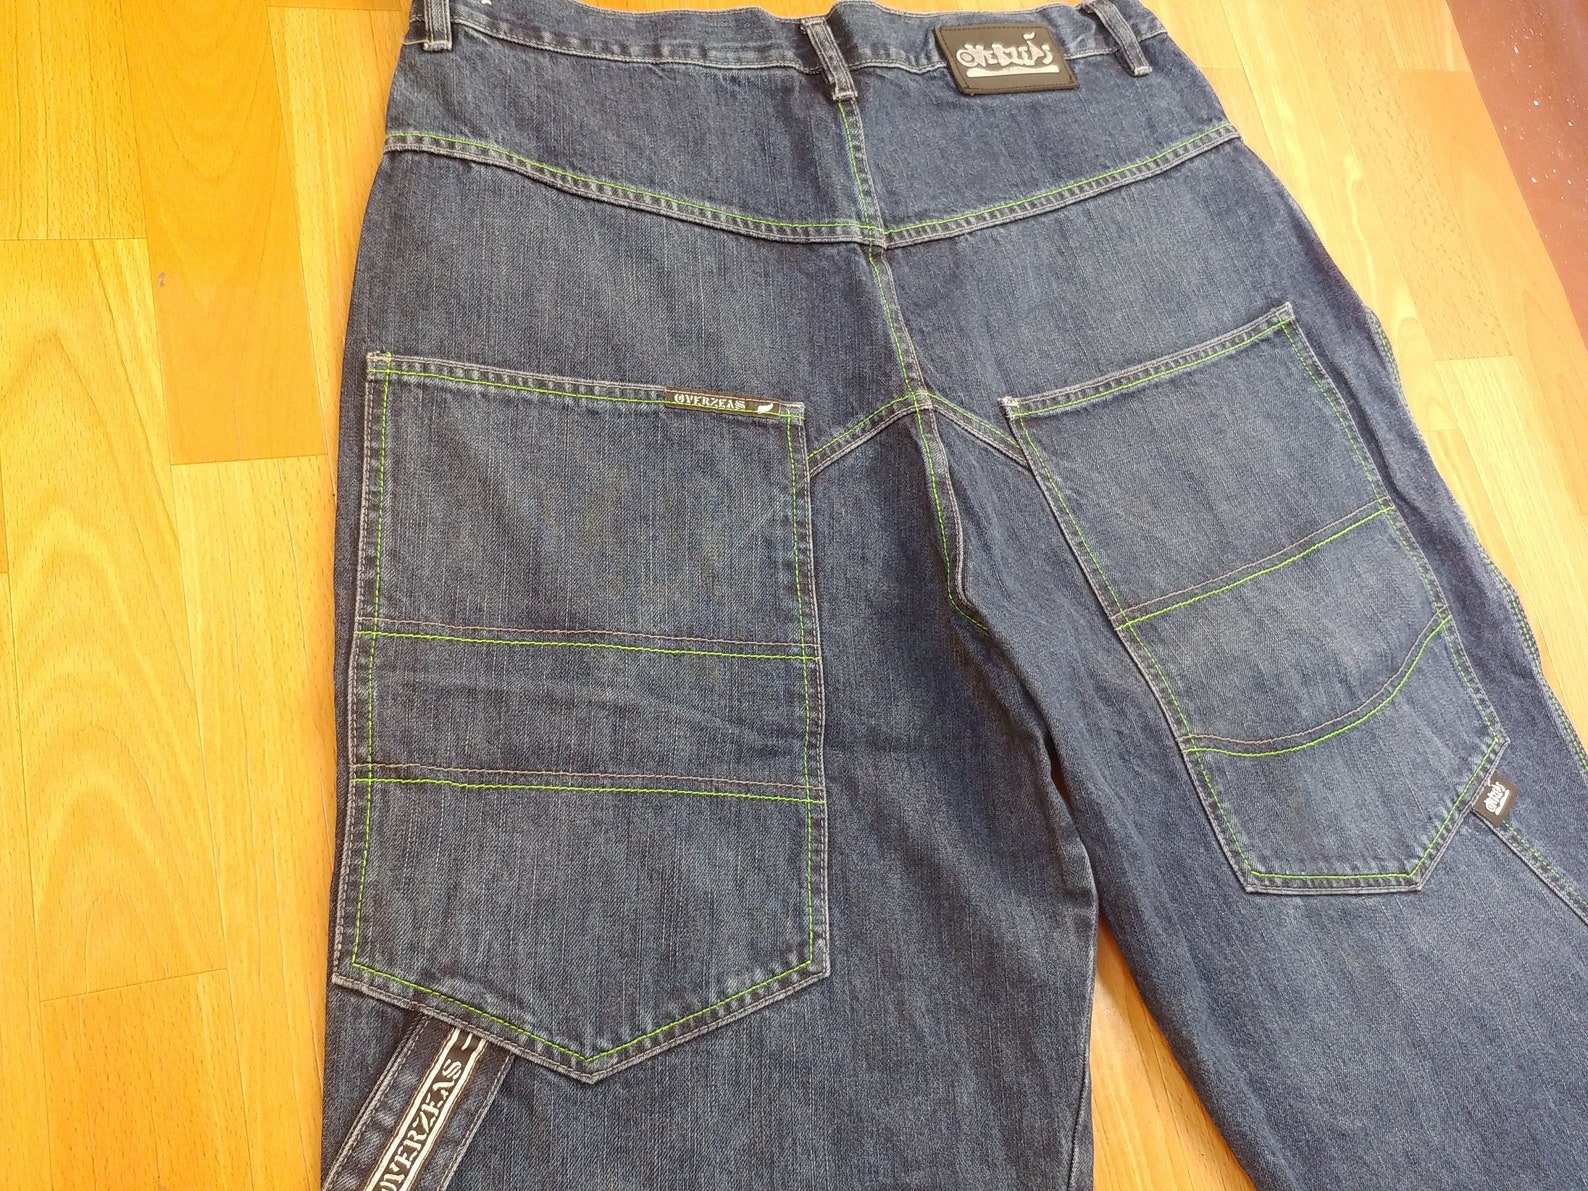 Overseas Jeans Shorts Vintage Denim Hip-hop Shorts 90s - Etsy